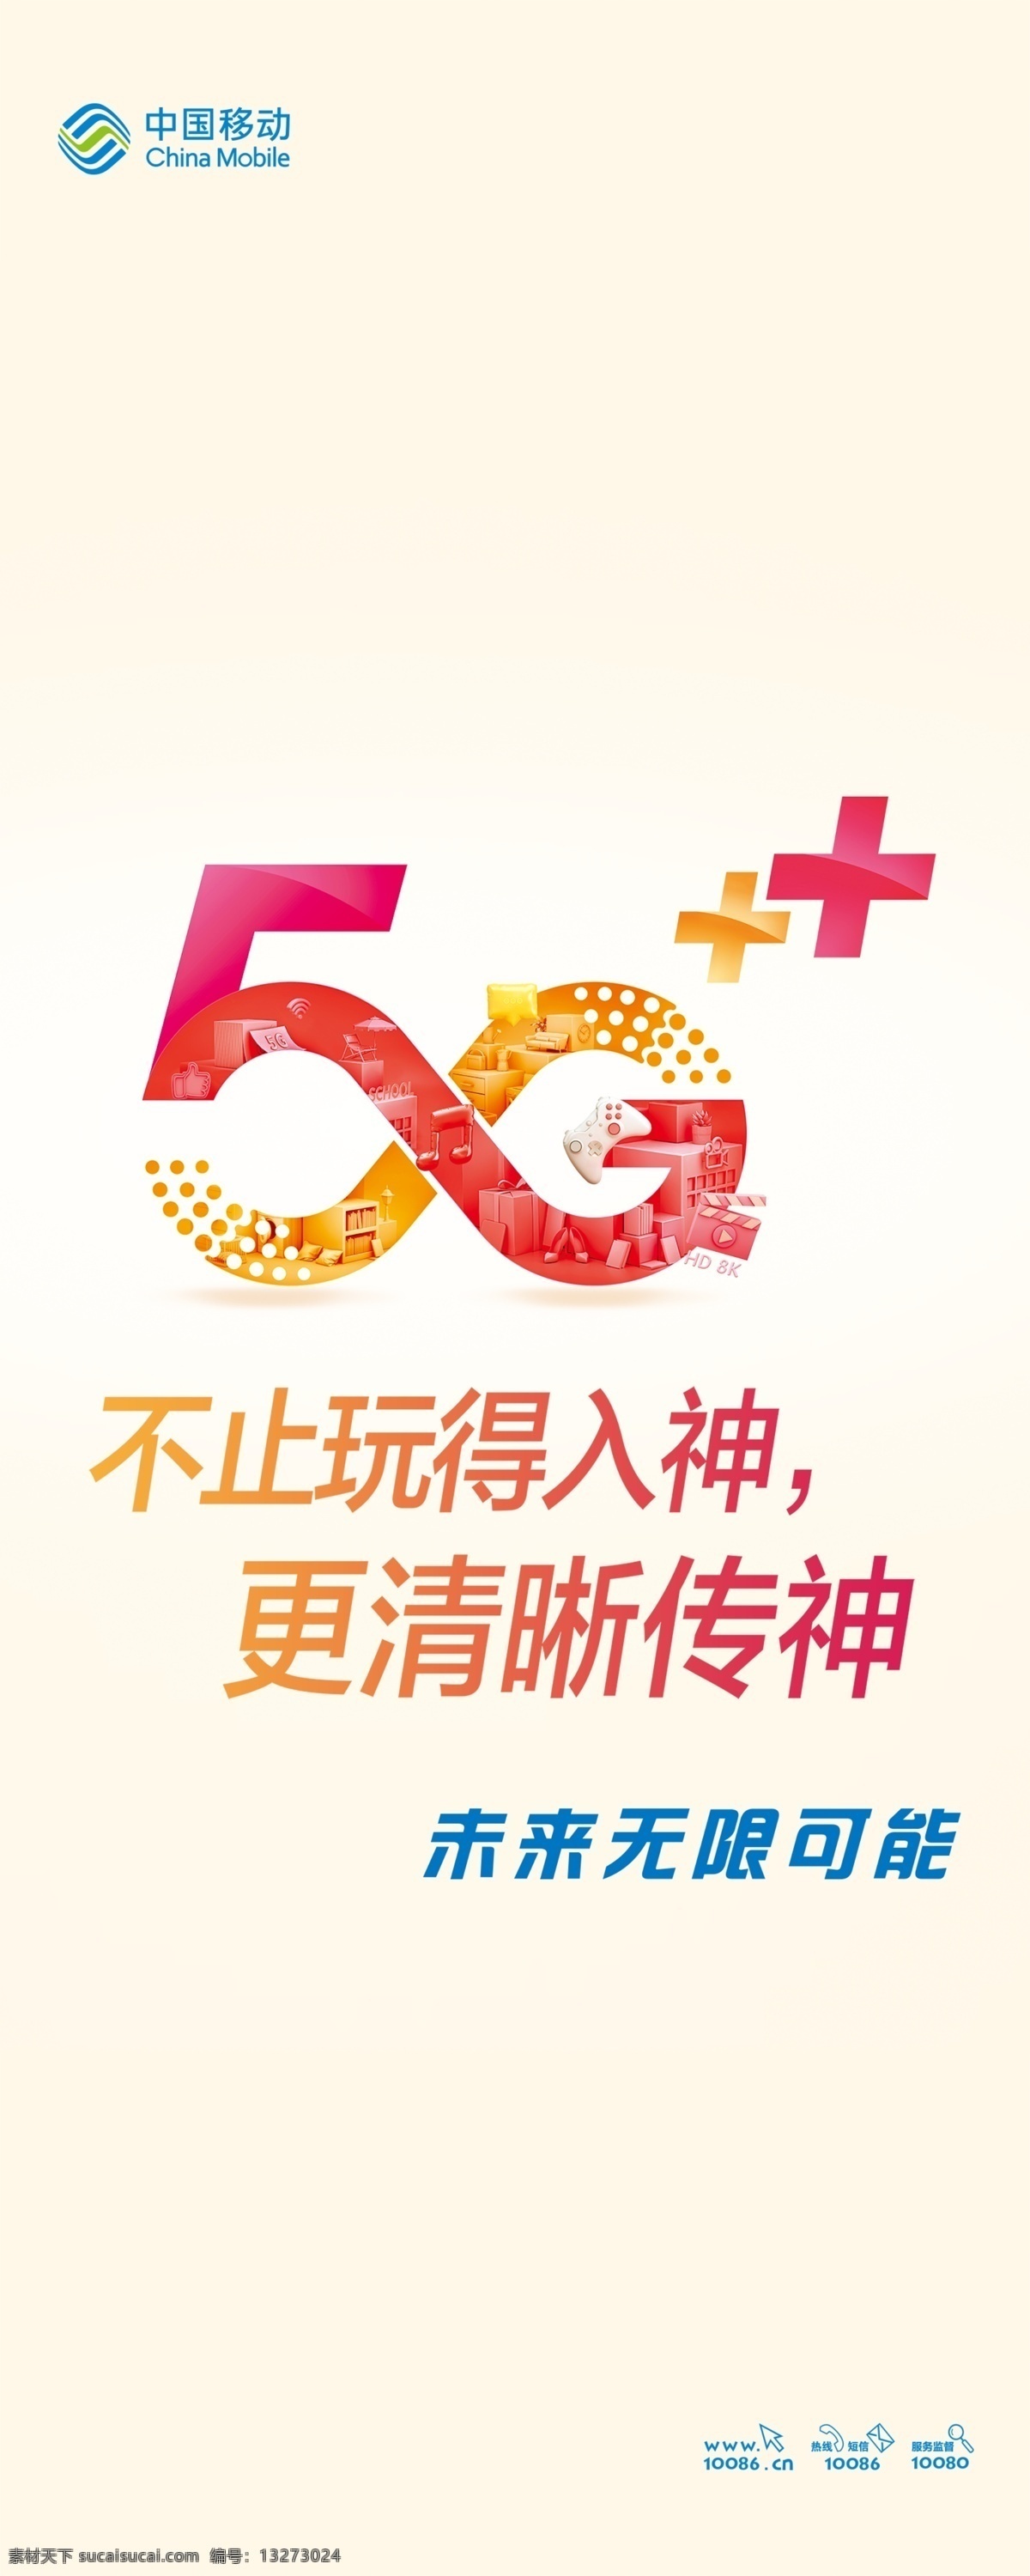 5g看移动 红色版 符号版 5g技术 5g市场 5g元年 5g应用 5g网络 5g终端 5g